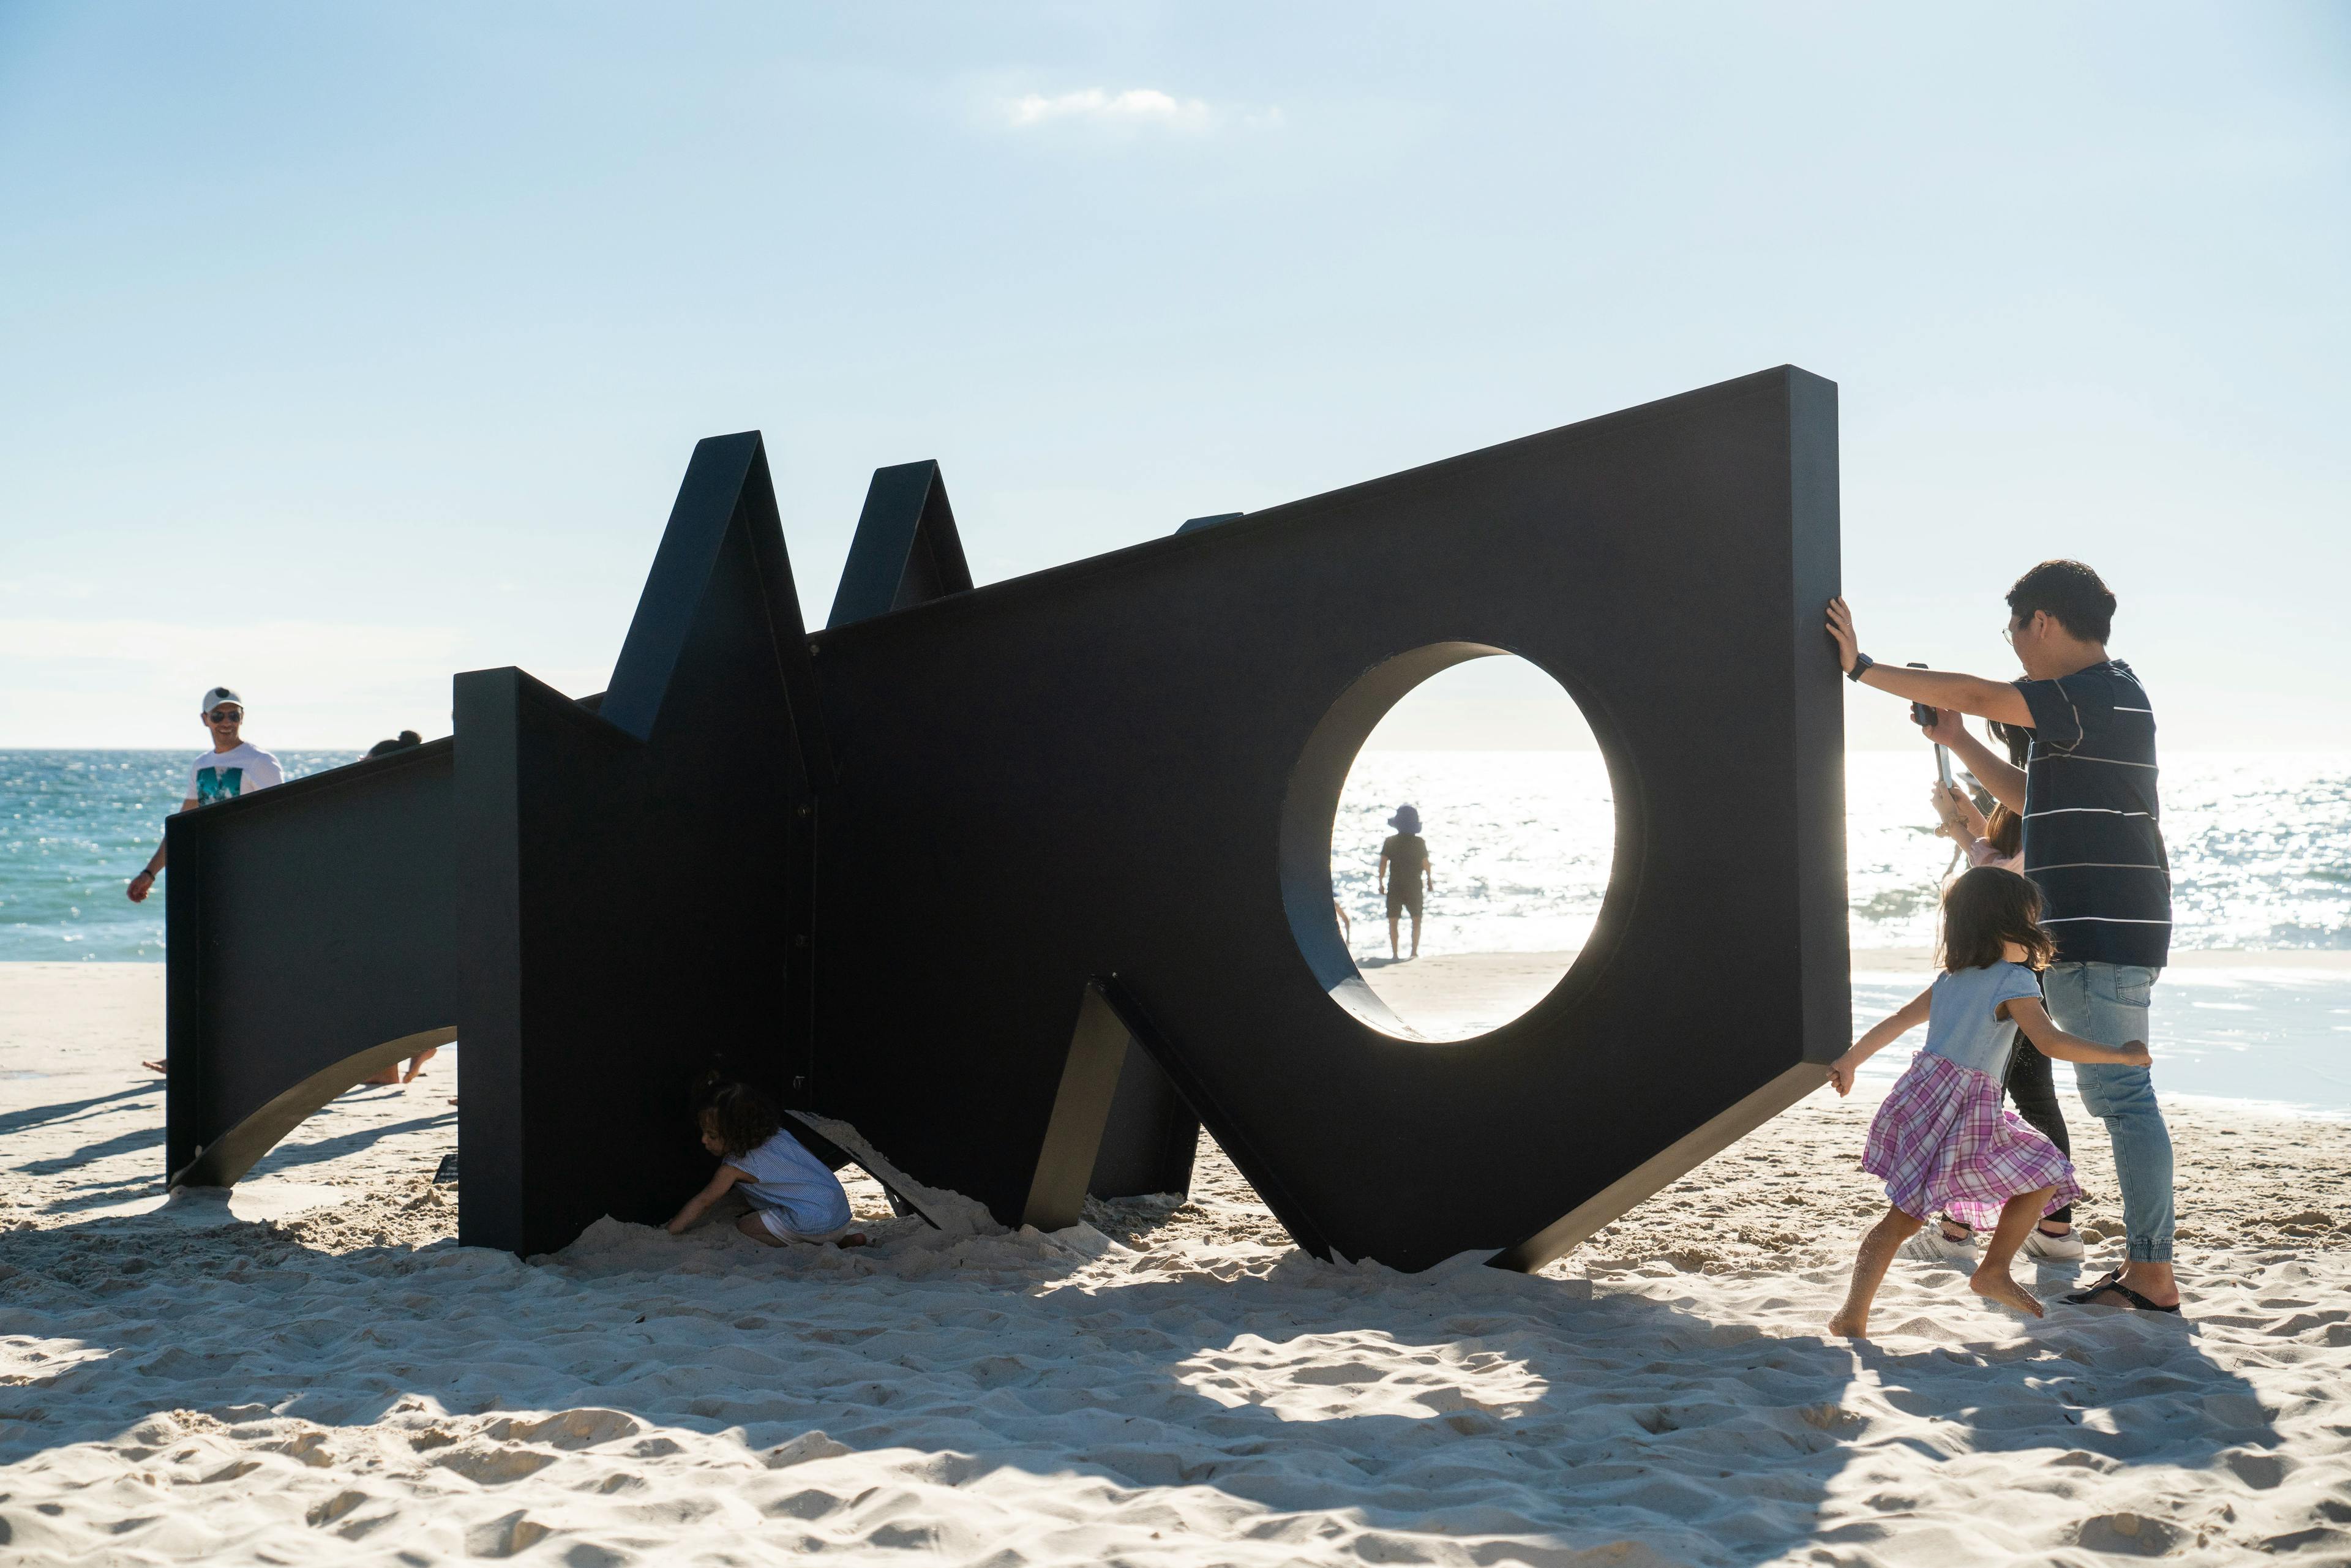 Man and little girl next to an oversized black sculpture by artist Fitzhugh Karol on a beach in Australia.